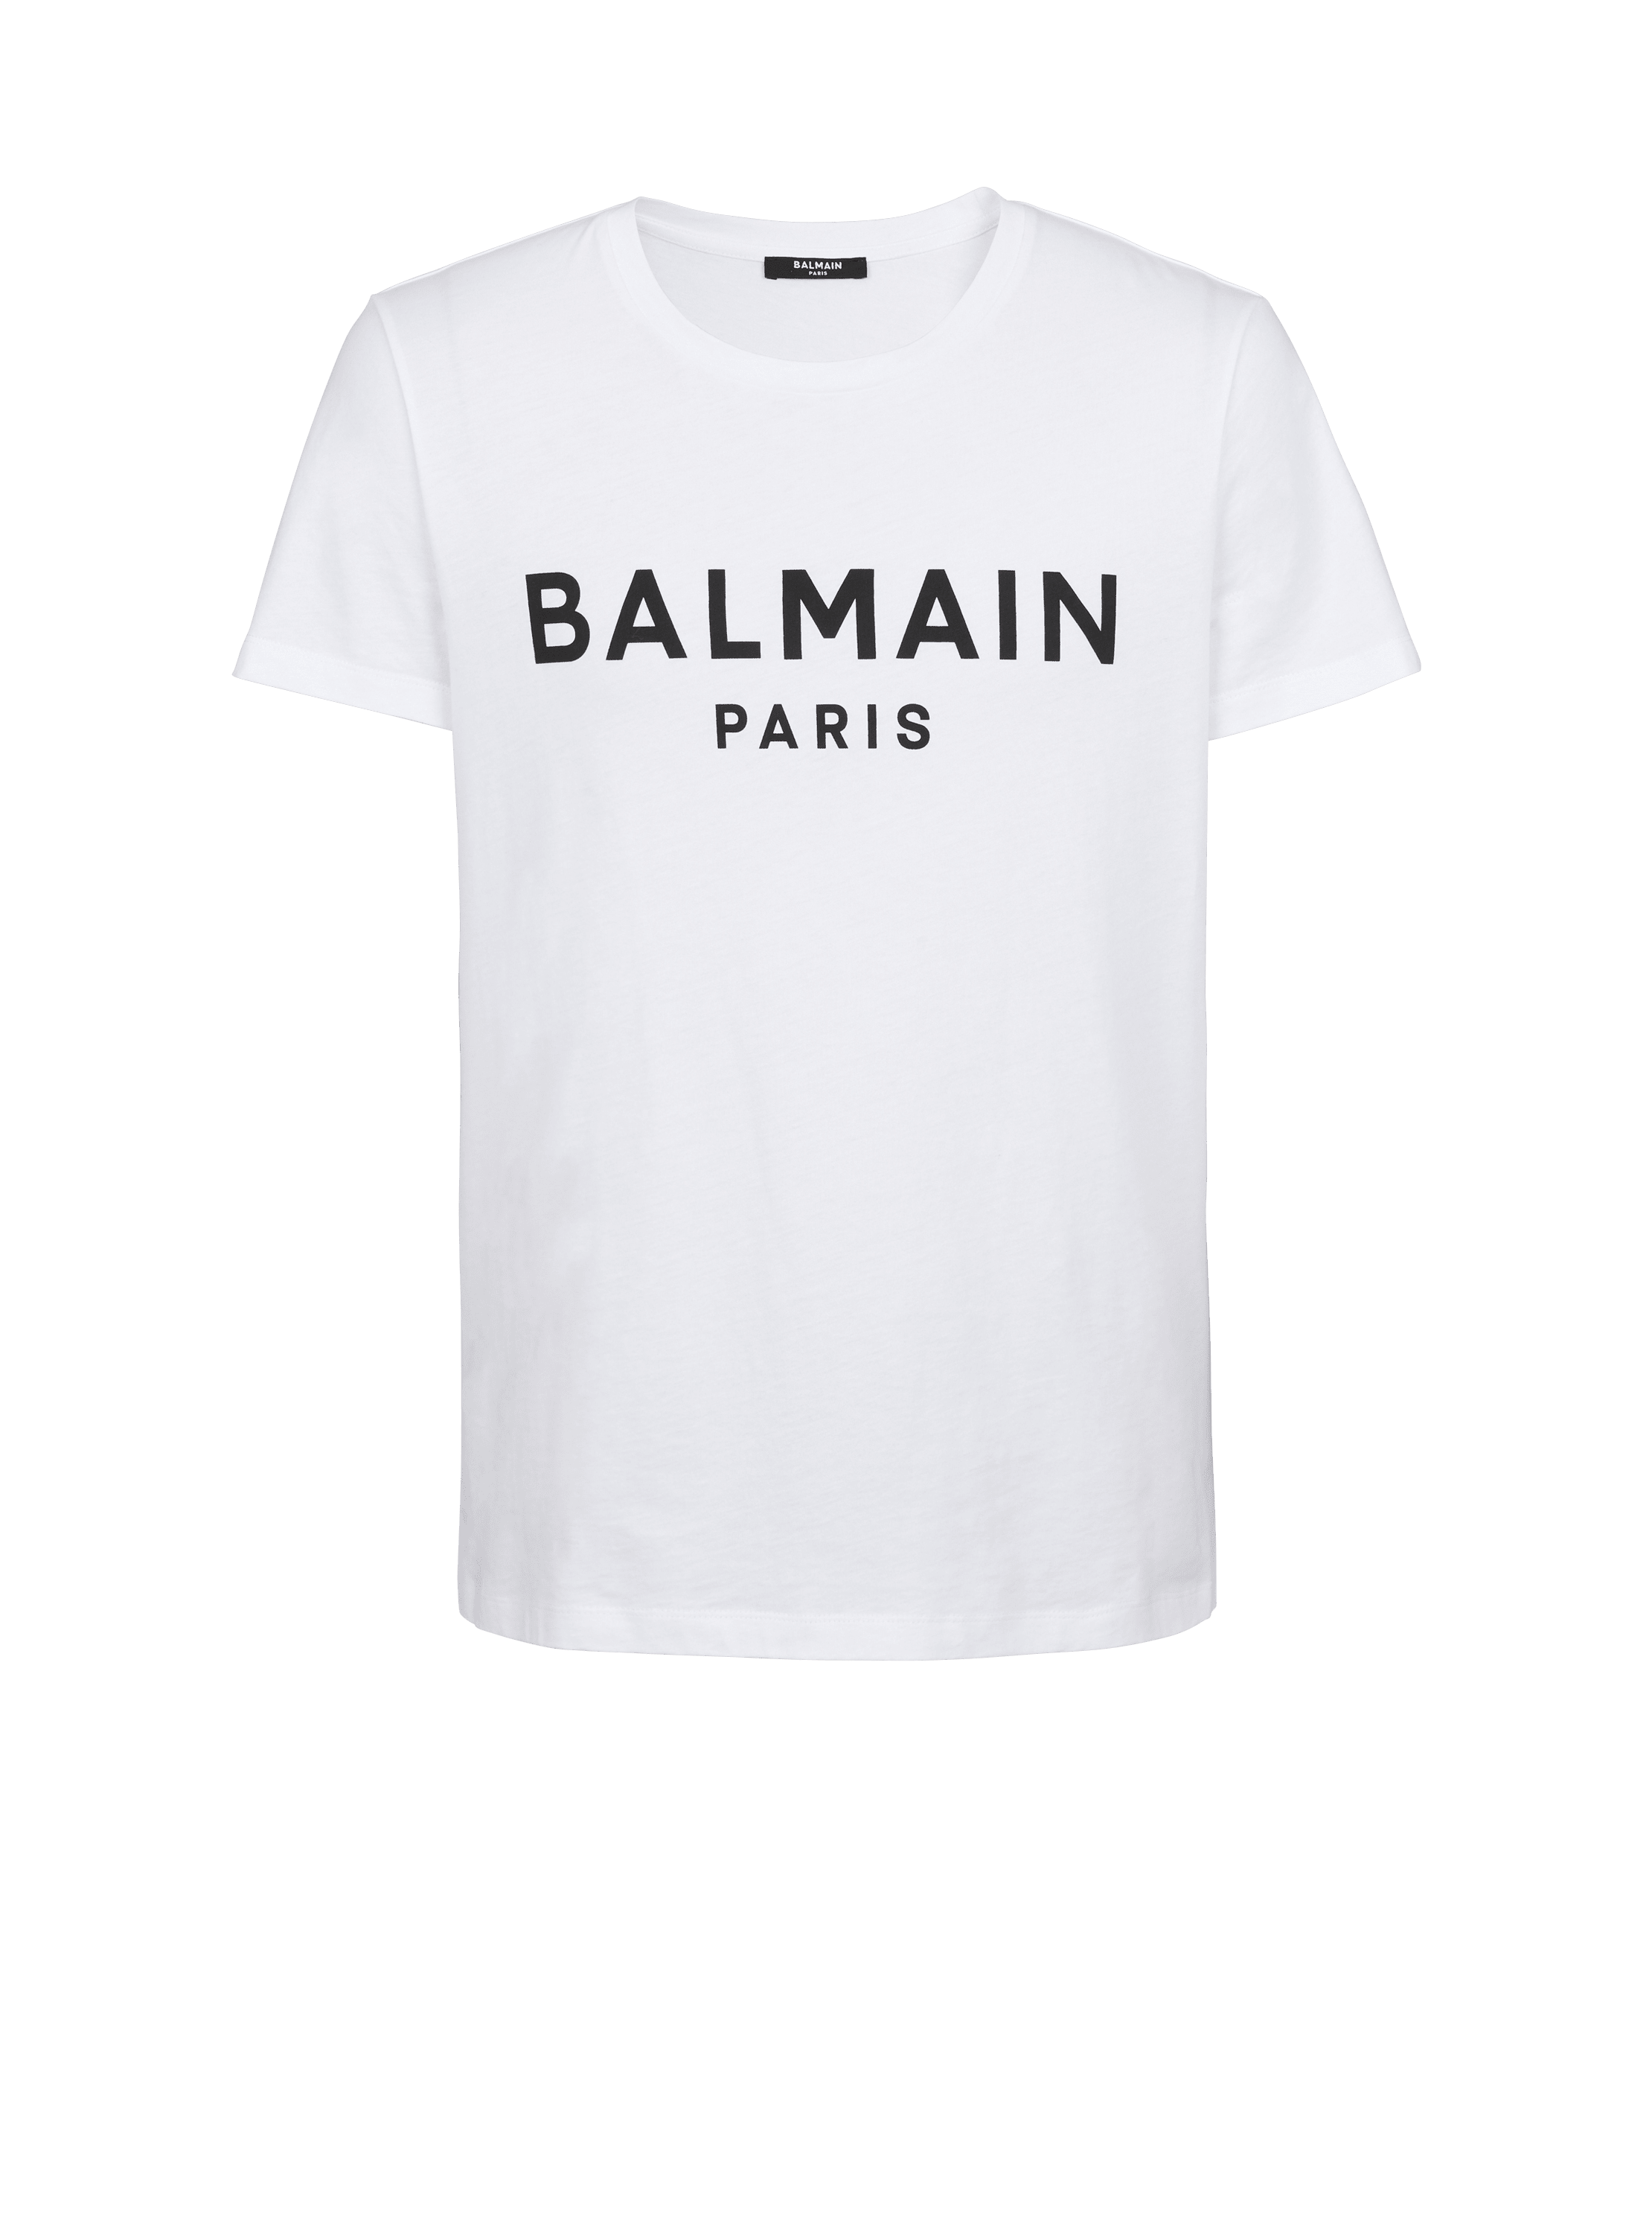 Balmain Paris T-shirt white | BALMAIN